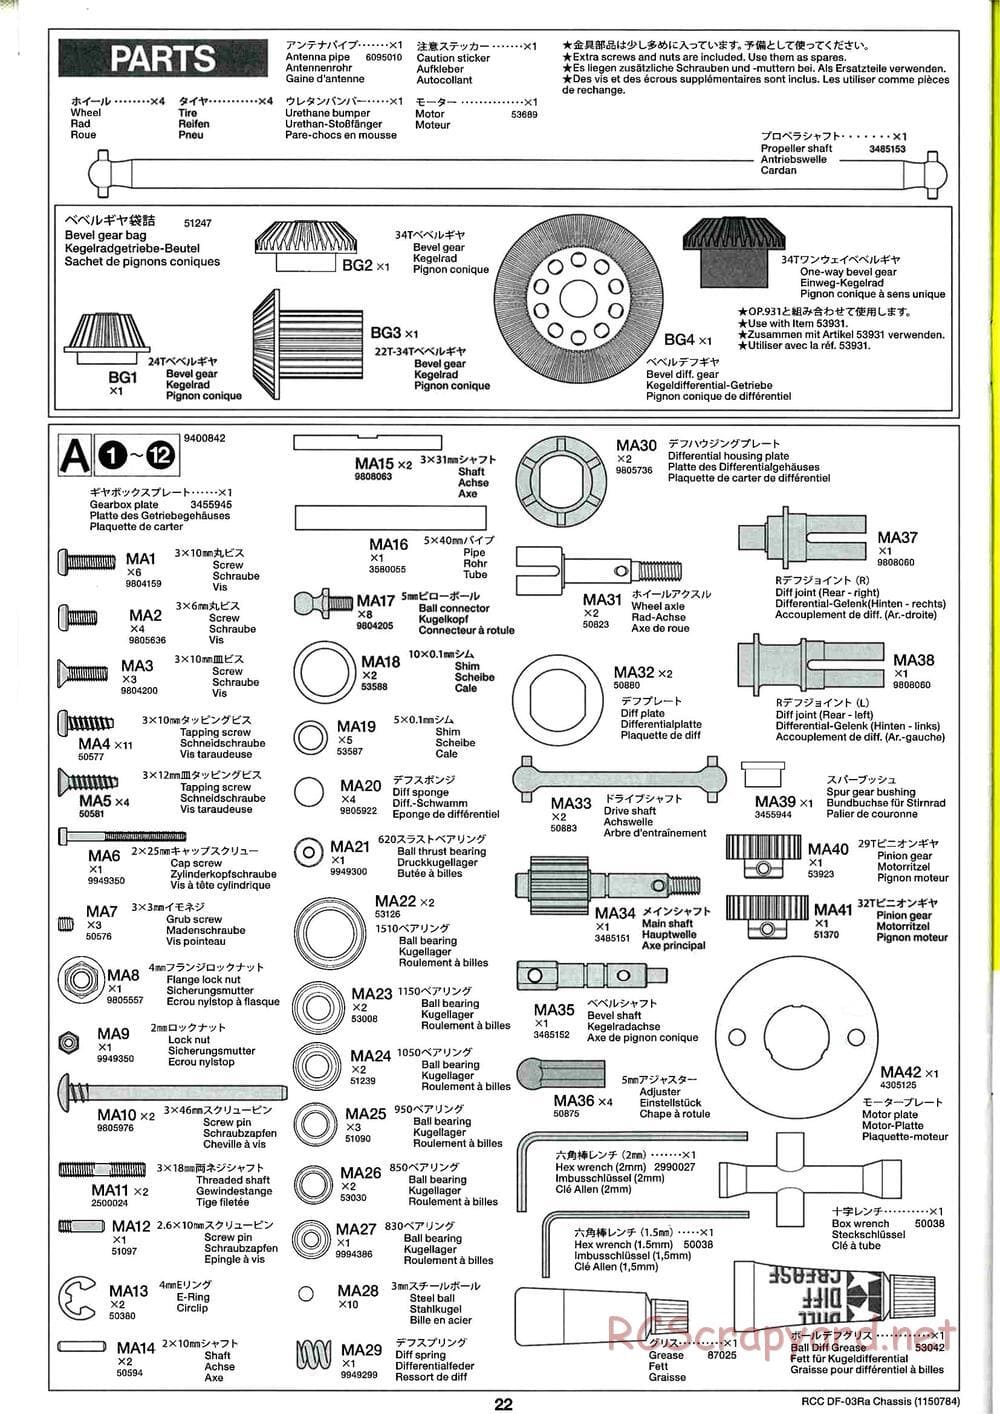 Tamiya - DF-03Ra Chassis - Manual - Page 22